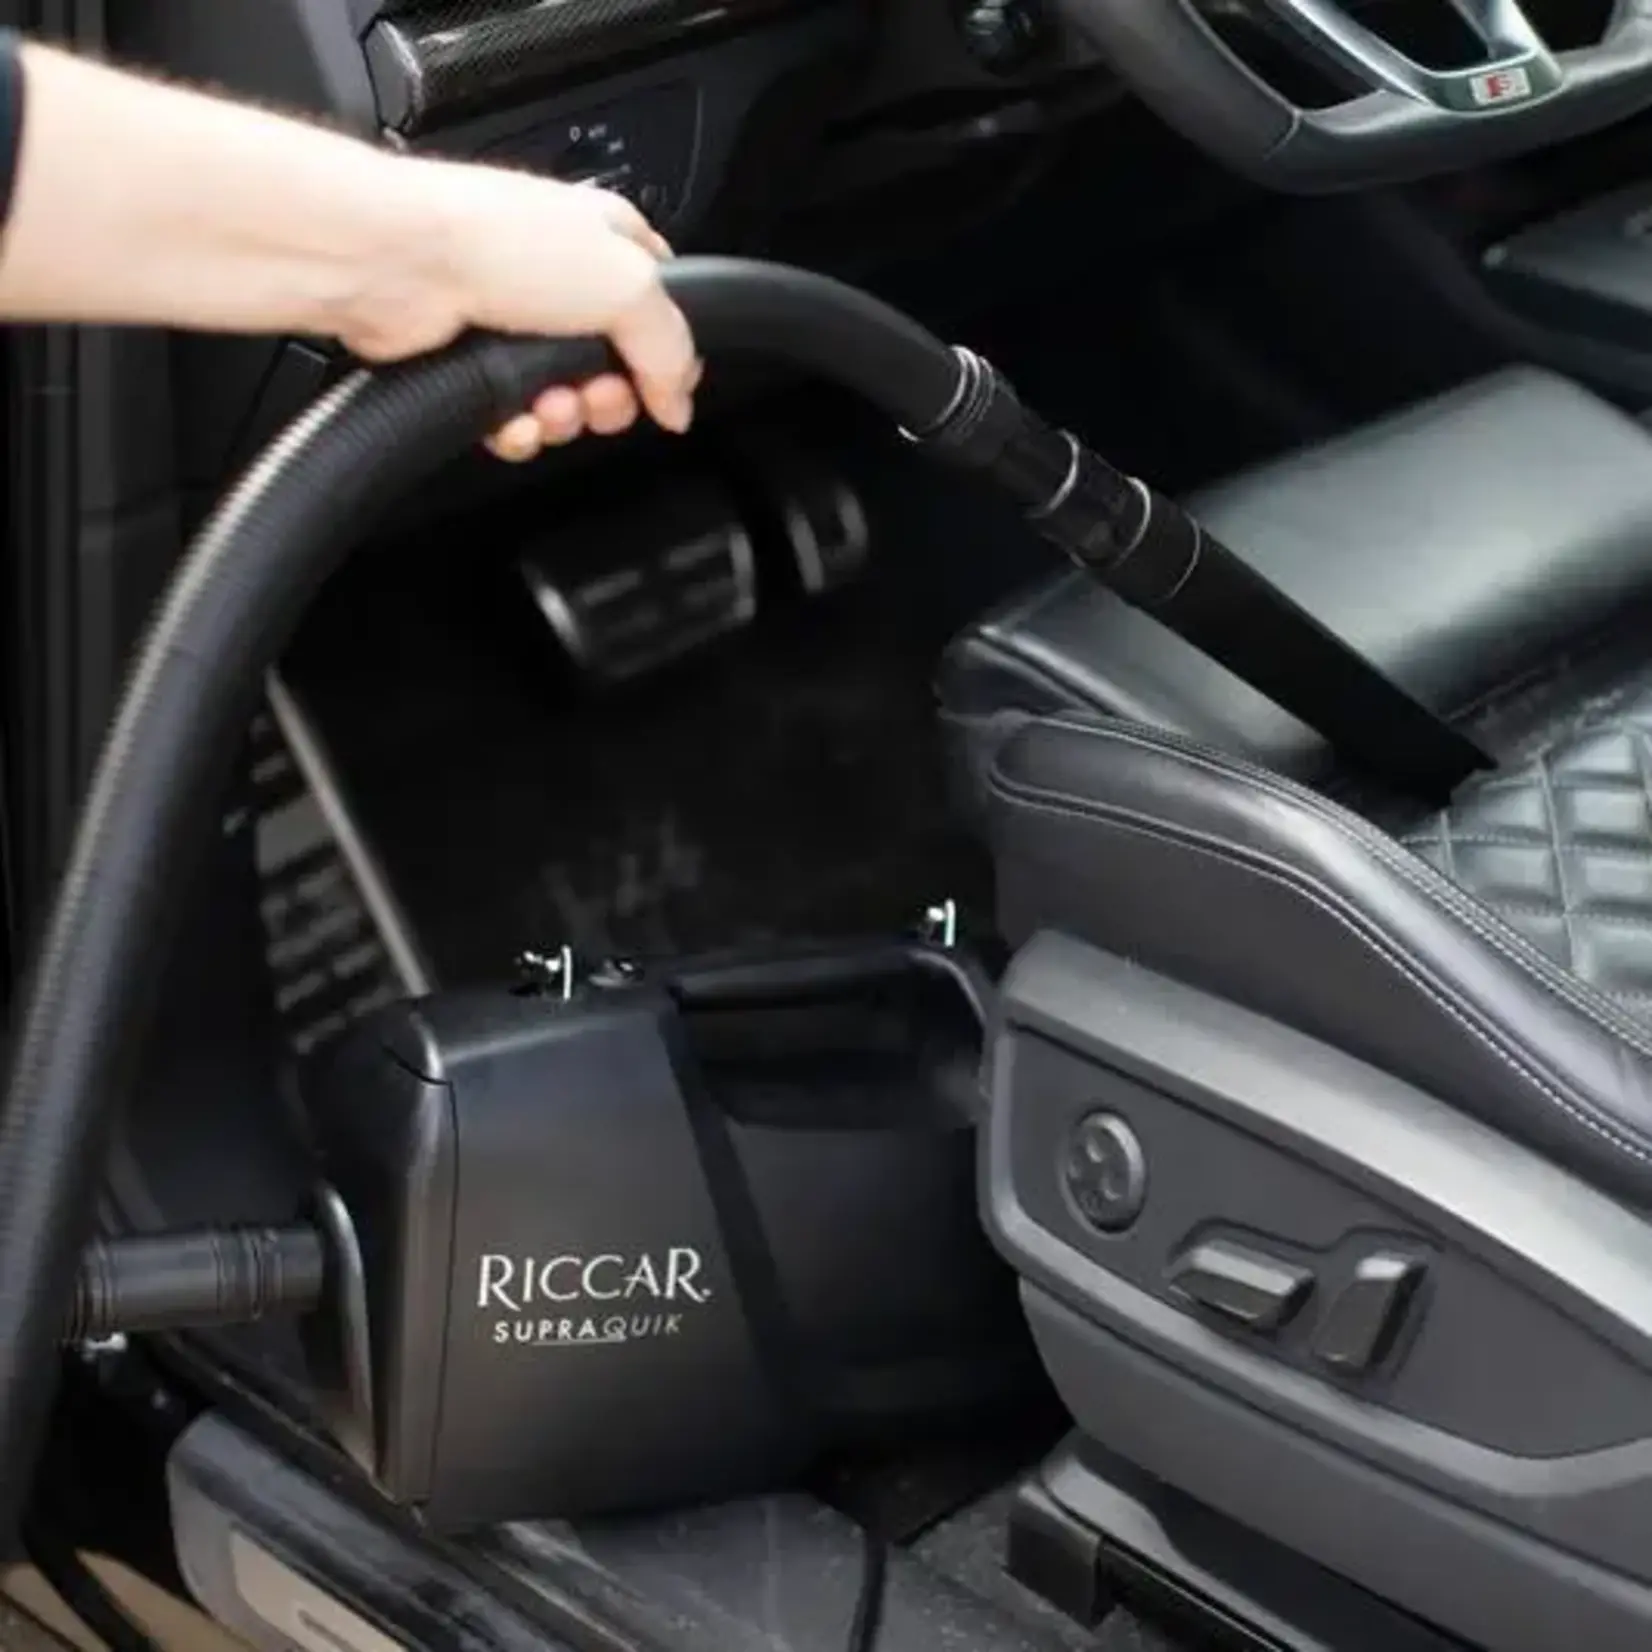 Riccar Riccar SupraQuick Portable Canister Vacuum - RSQ1.6